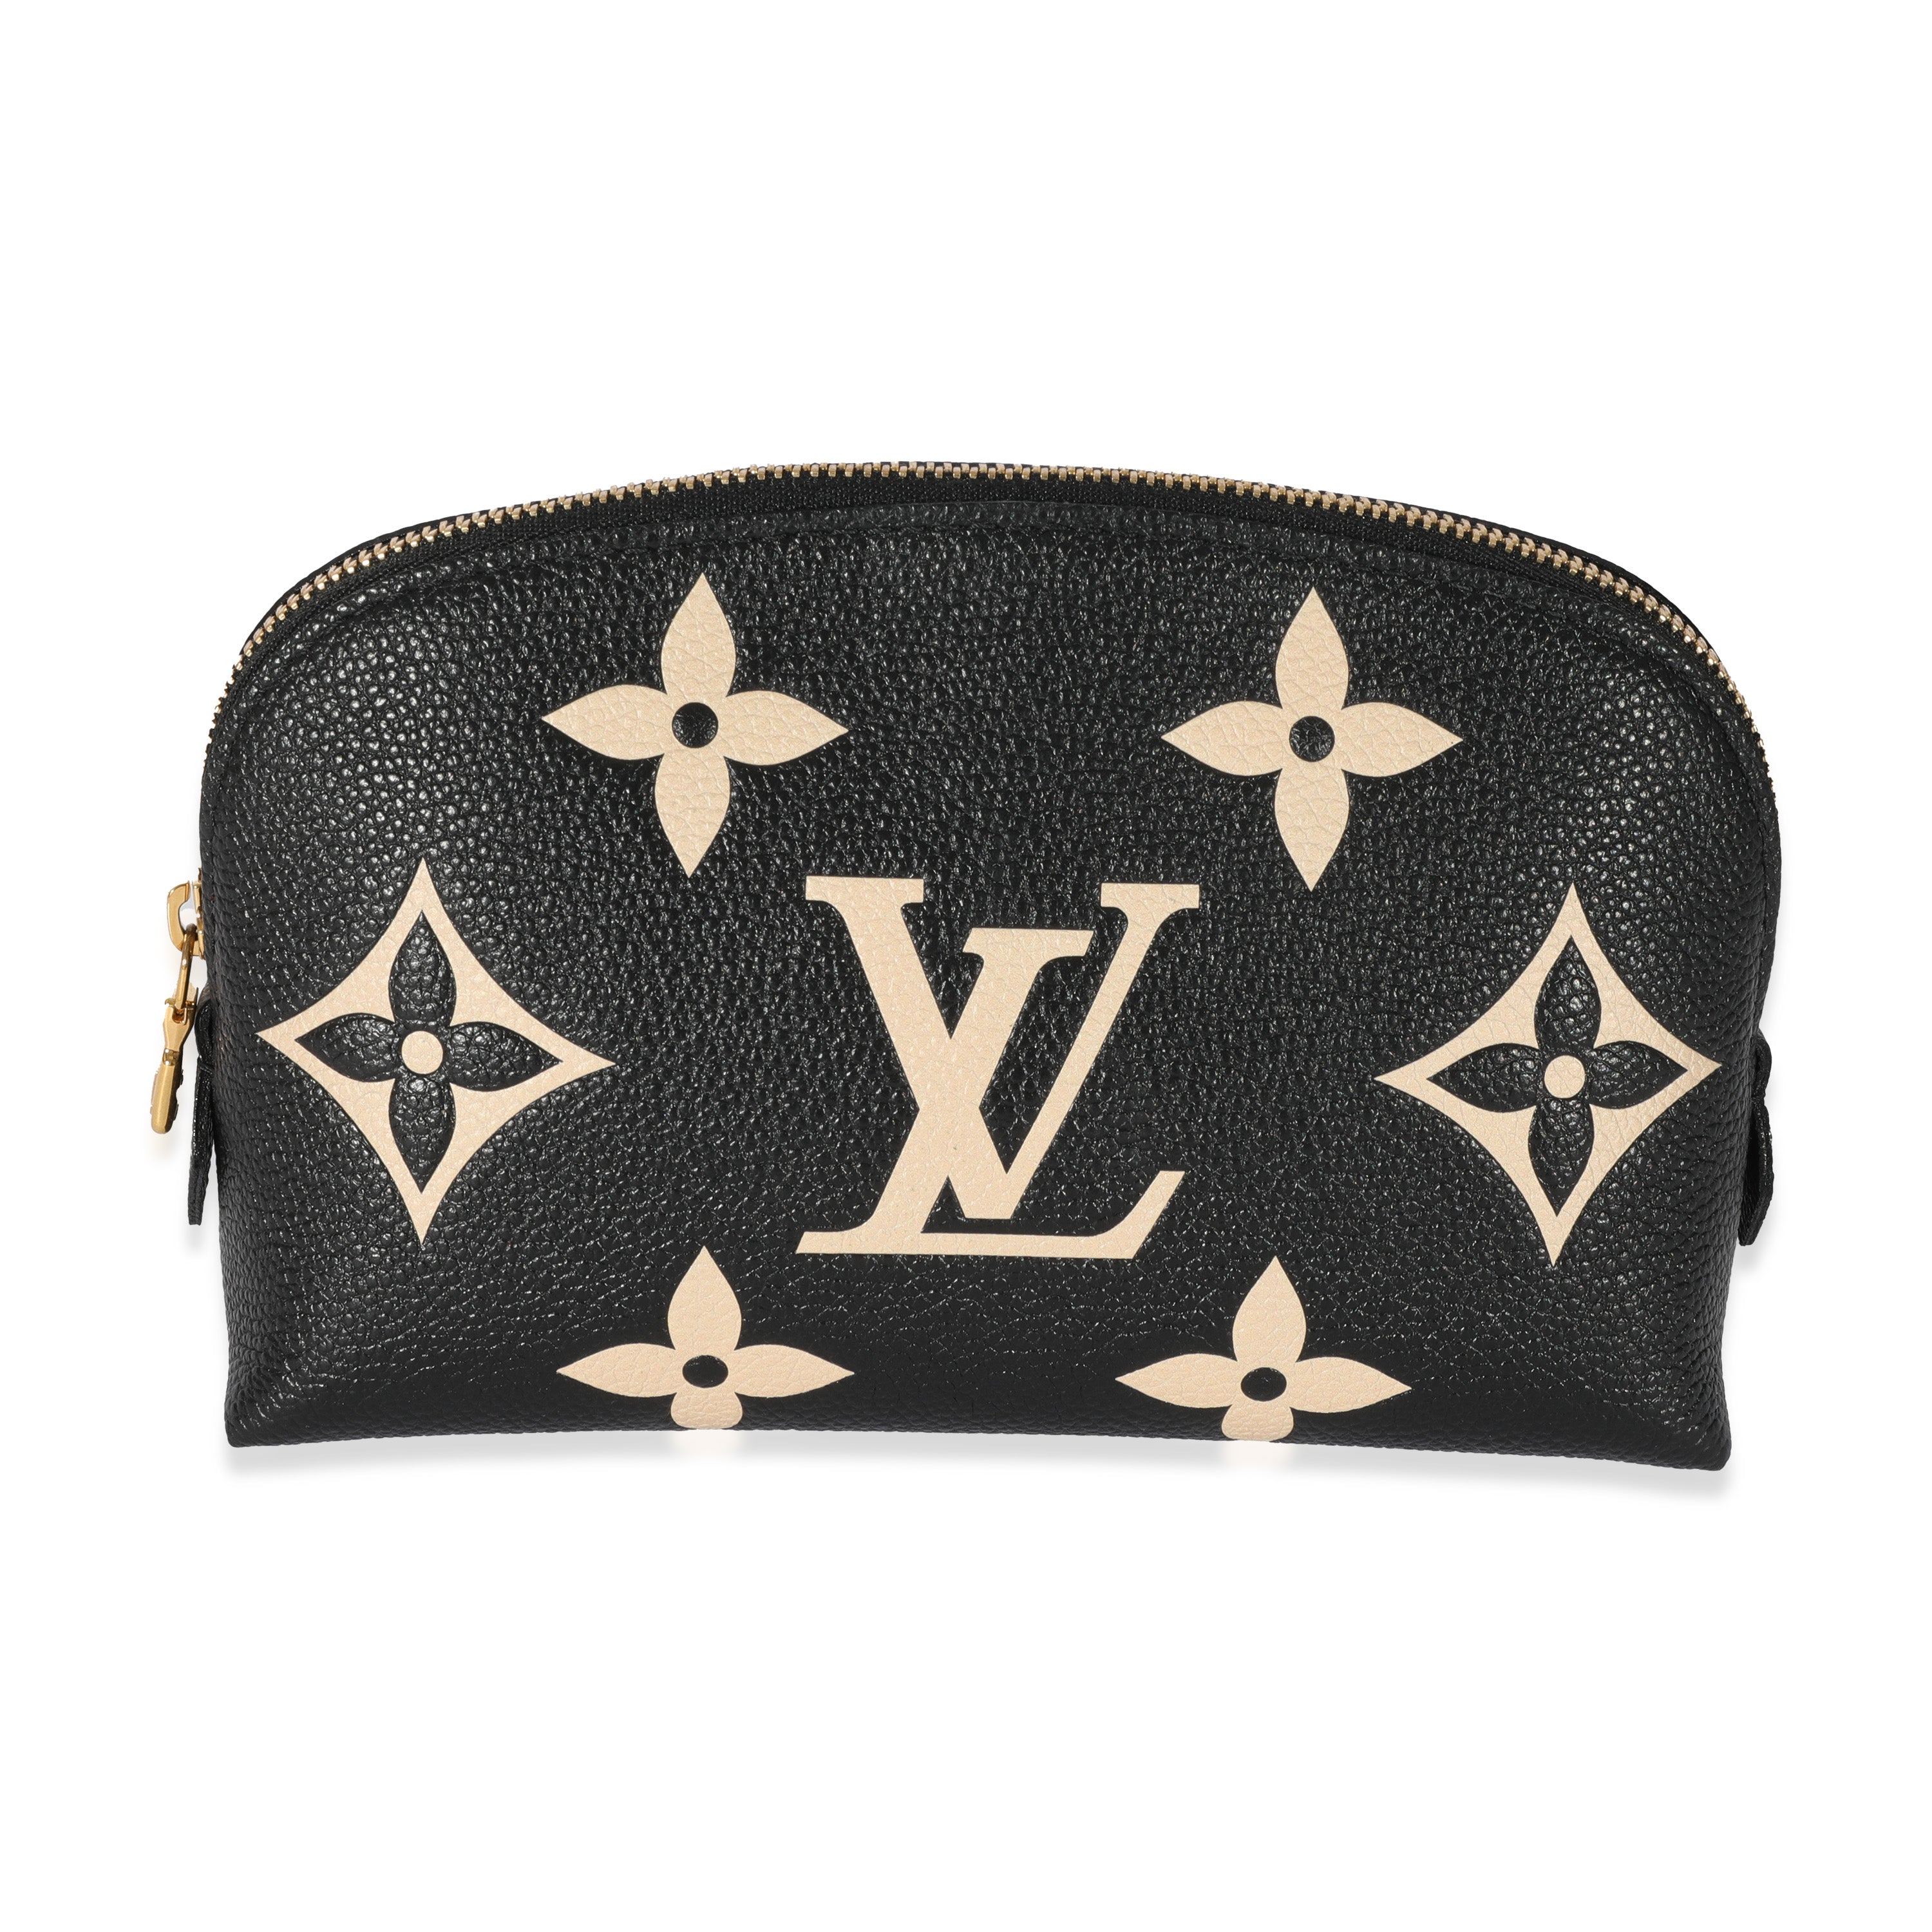 Geranium Suhali Leather Louis Vuitton Handbag - Handbags & Purses